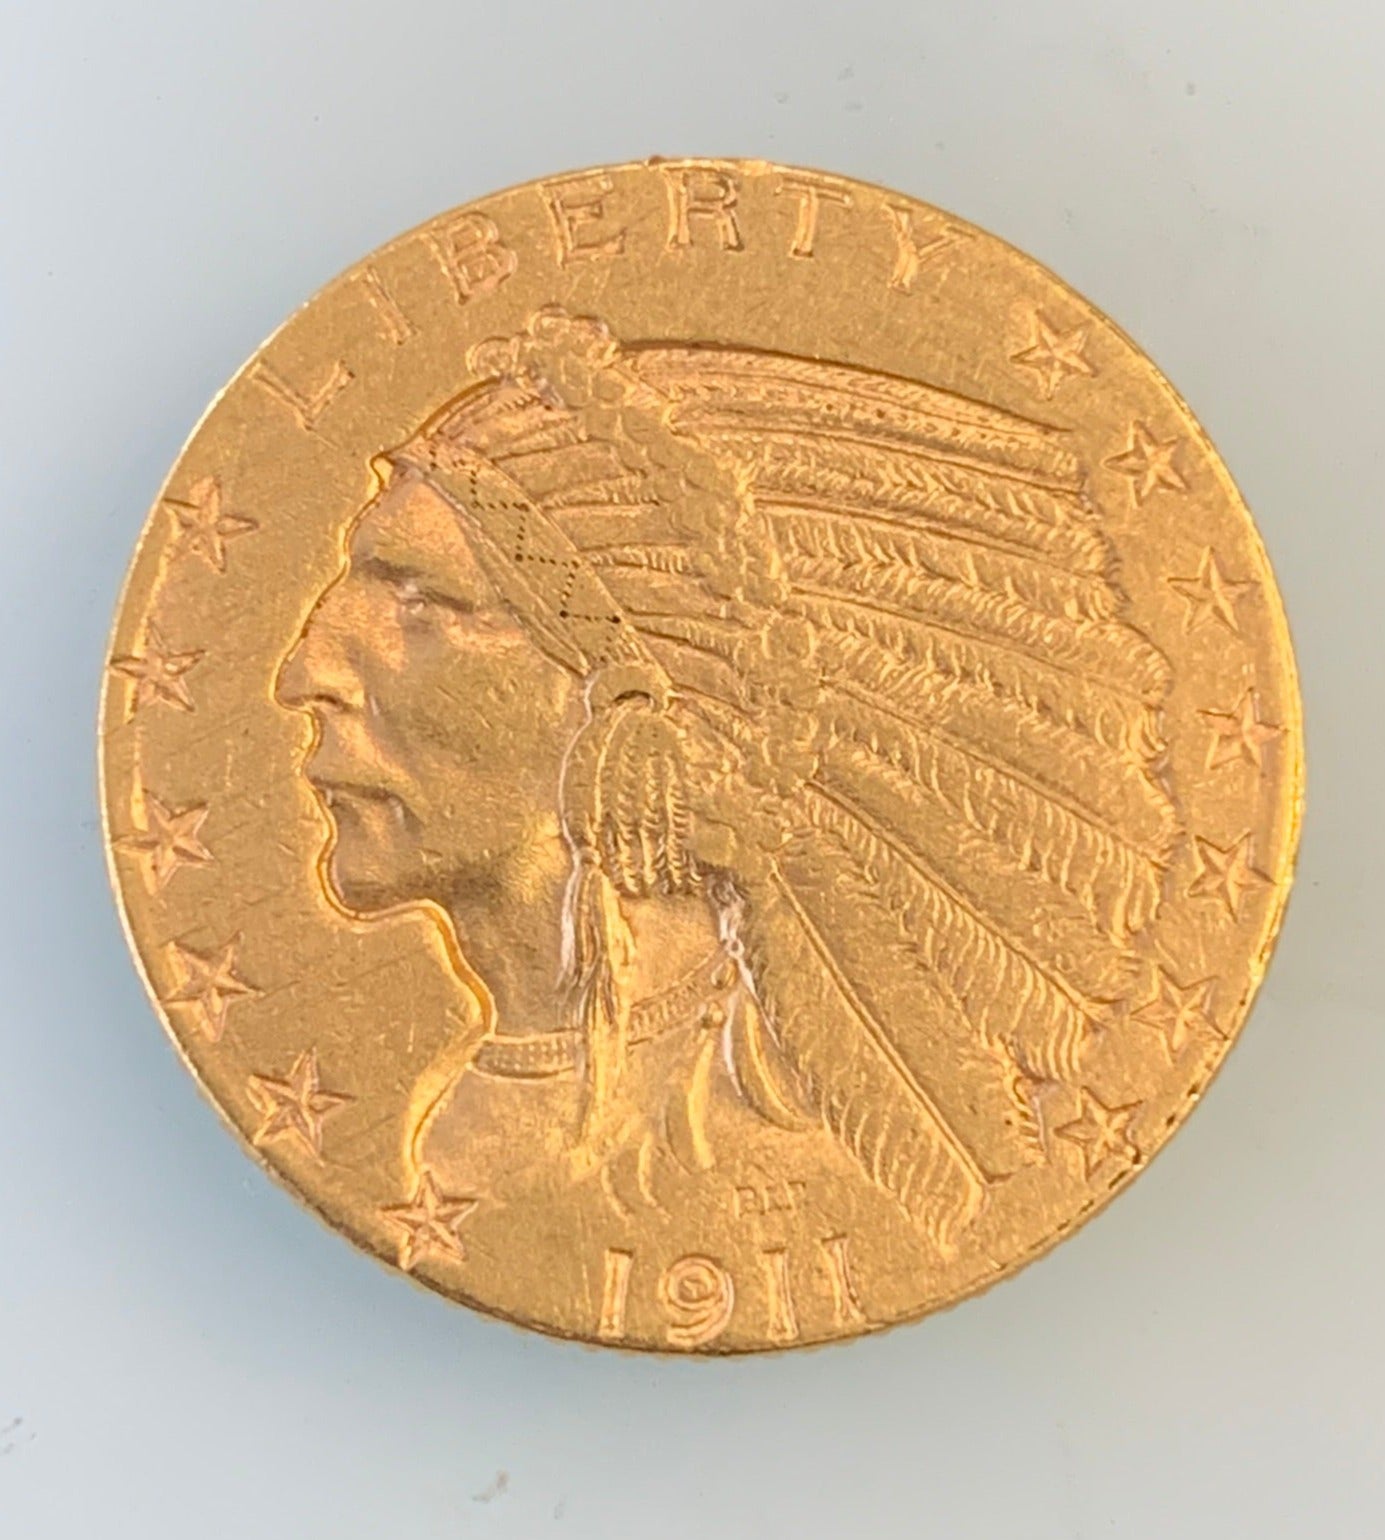 1911 $5 Dollar Indian Head Gold Half Eagle Coin